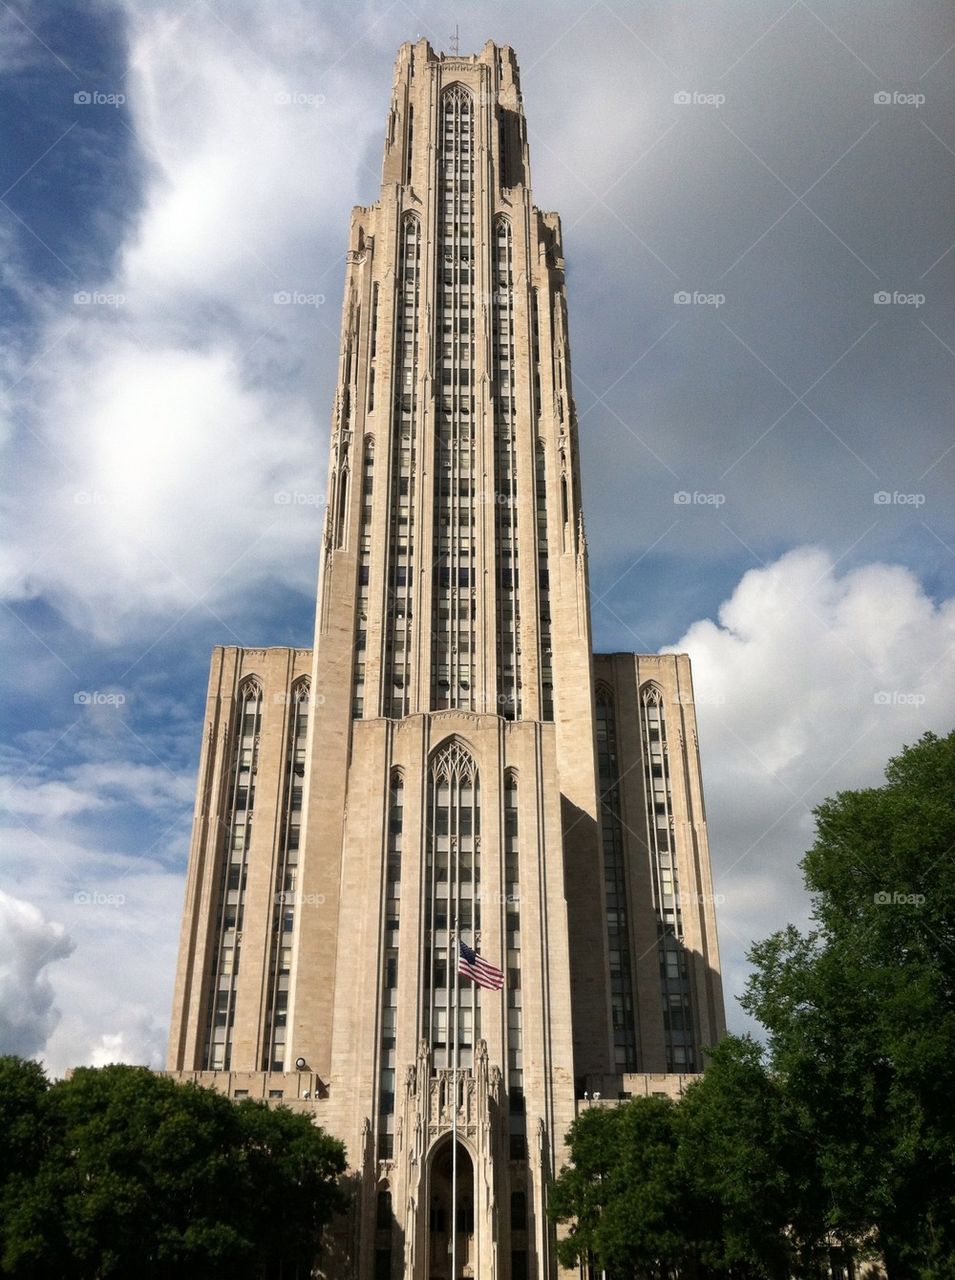 Tower at Pitt university 